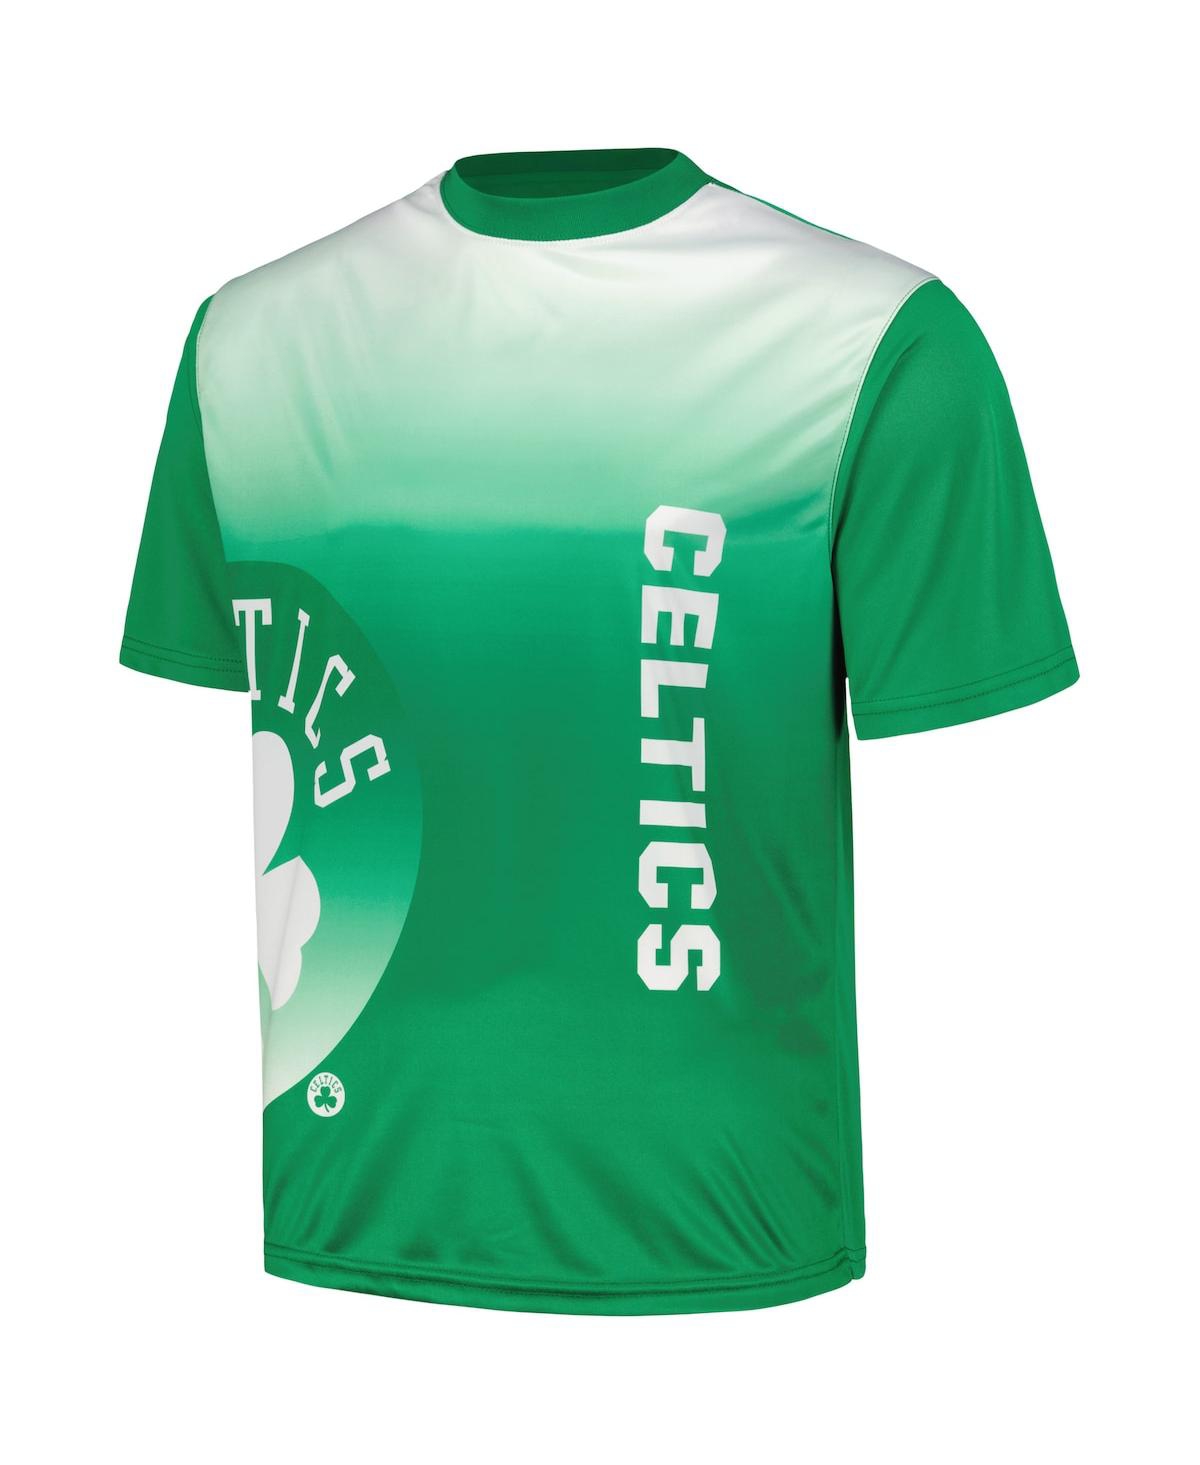 Shop Fanatics Men's Kelly Green Boston Celtics Sublimated T-shirt